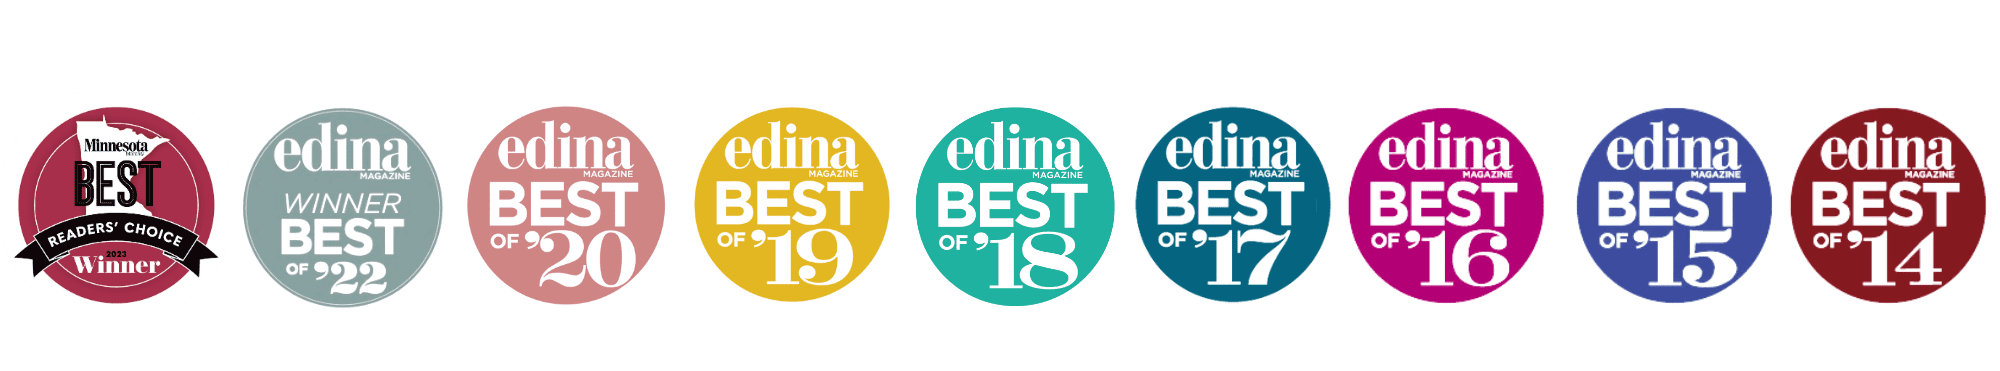 Best of EdinaMN Monthly (6)